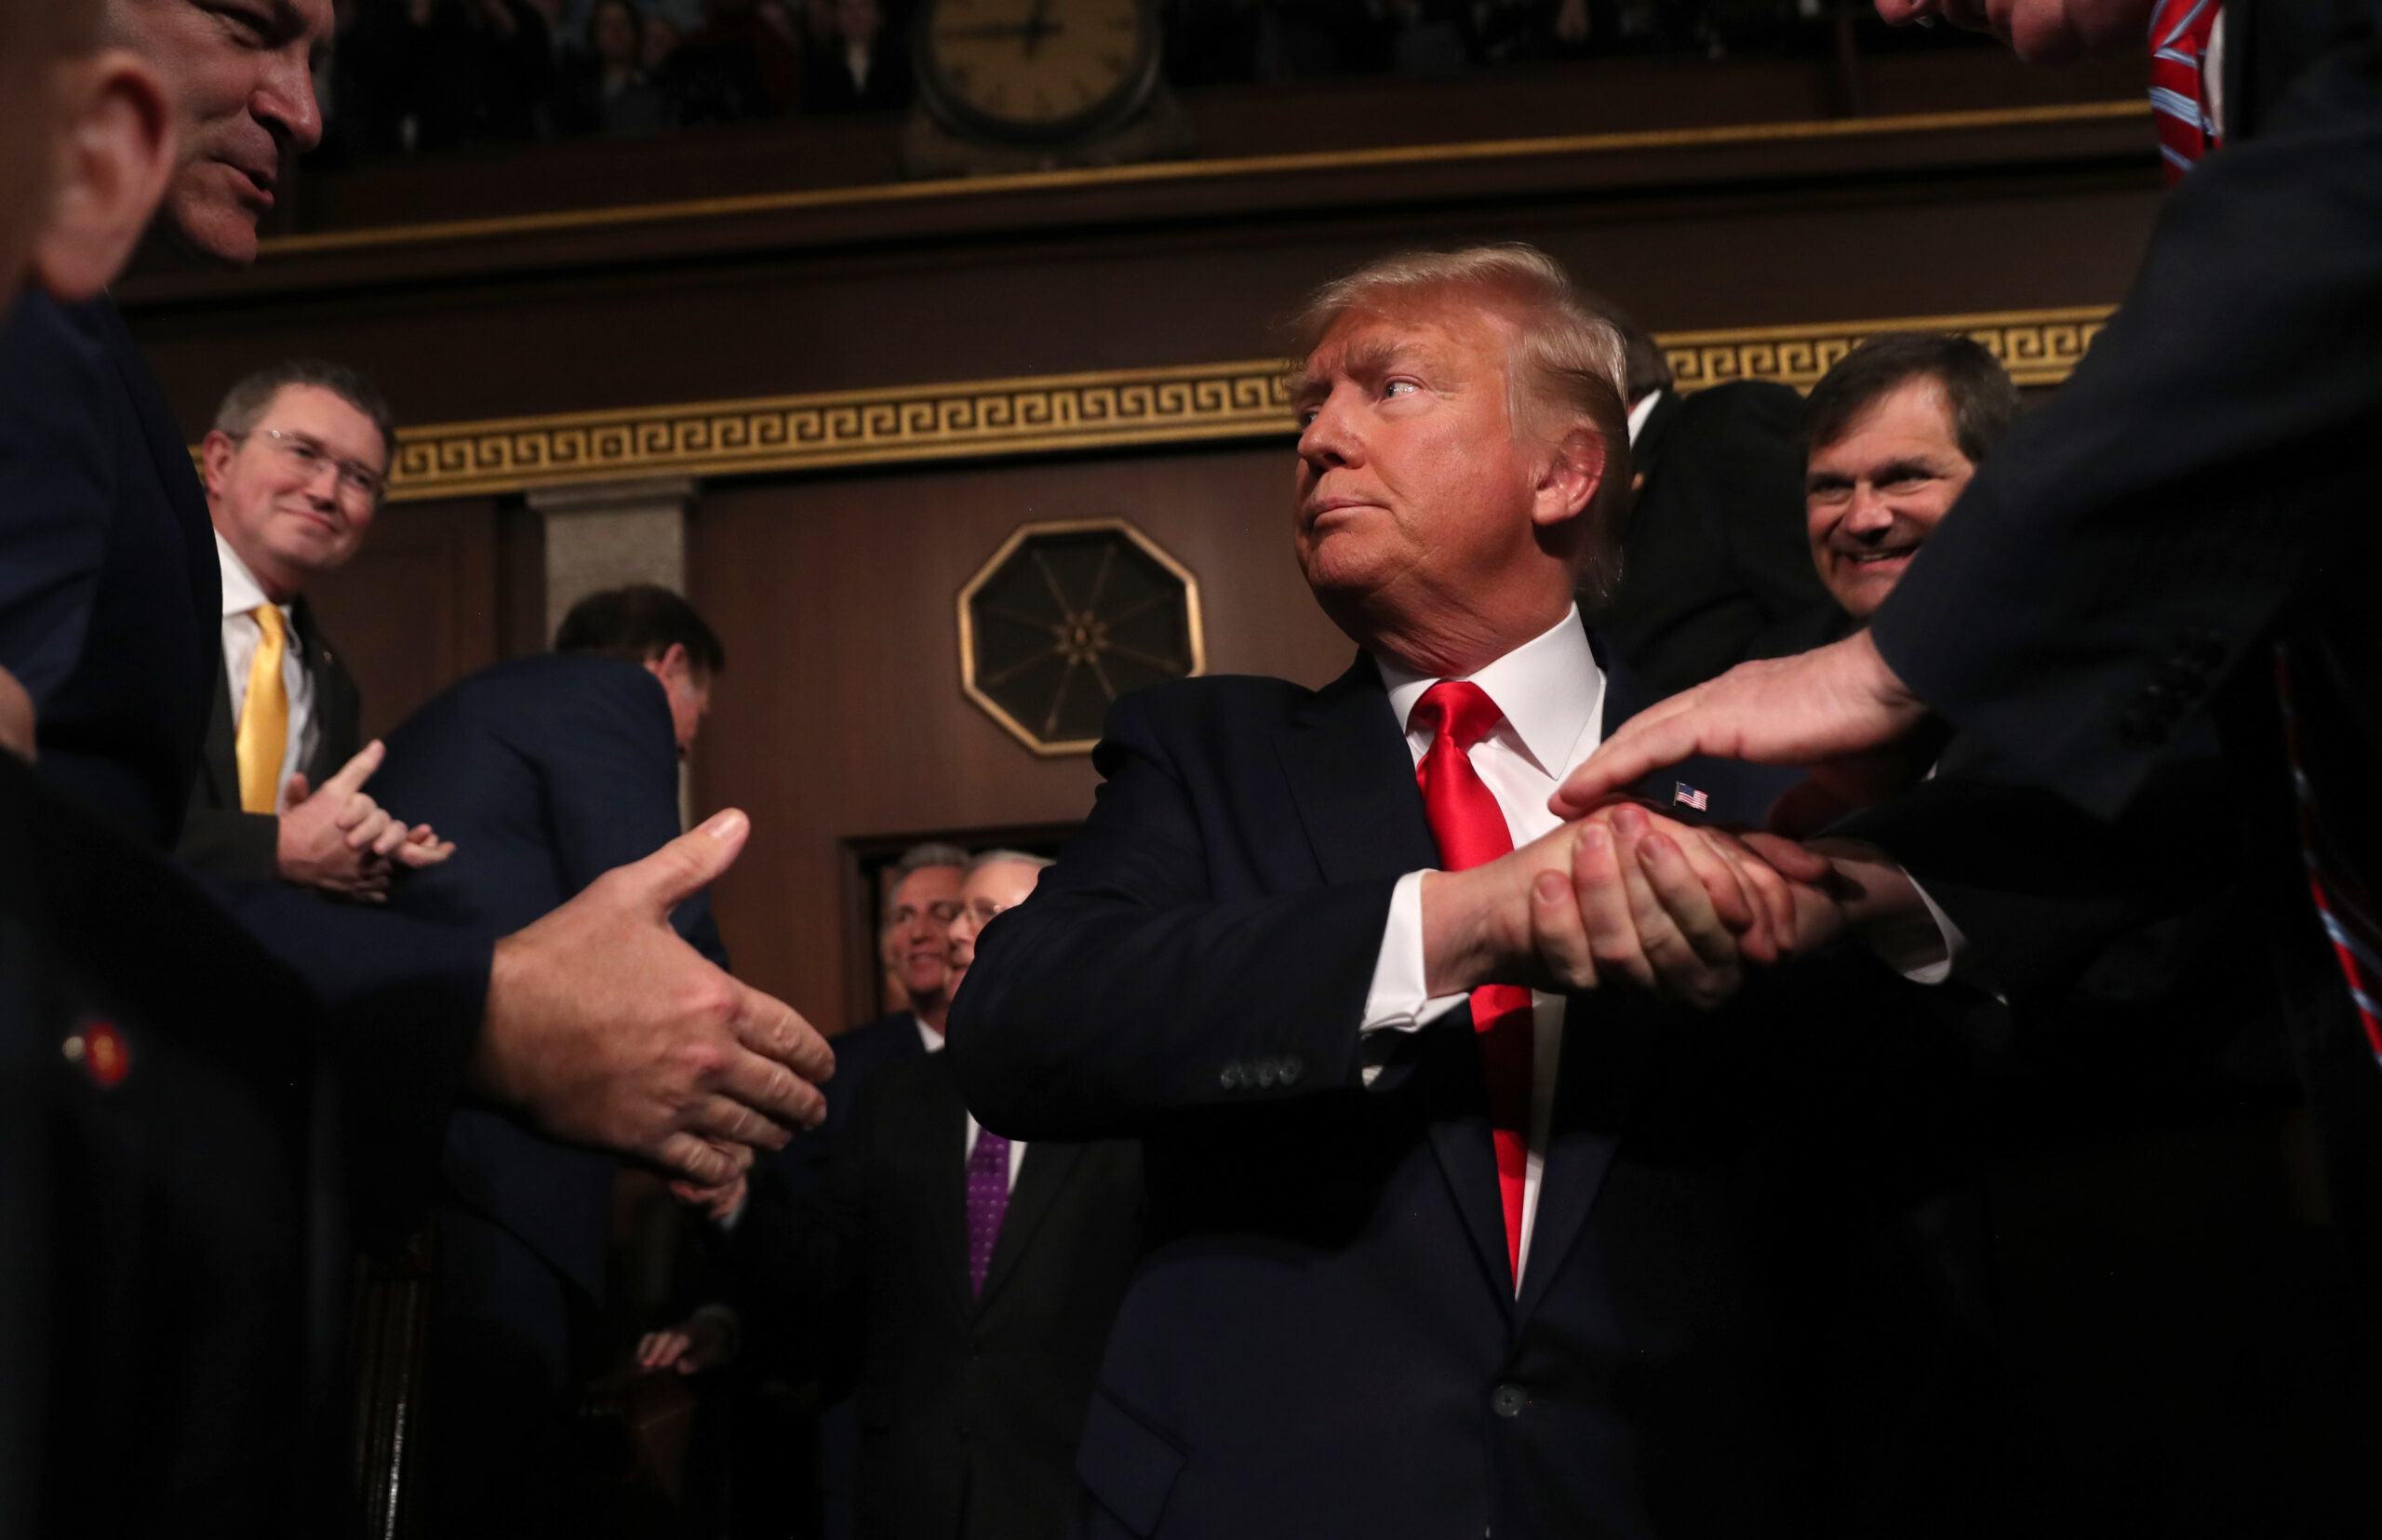 President Trump shakes hands